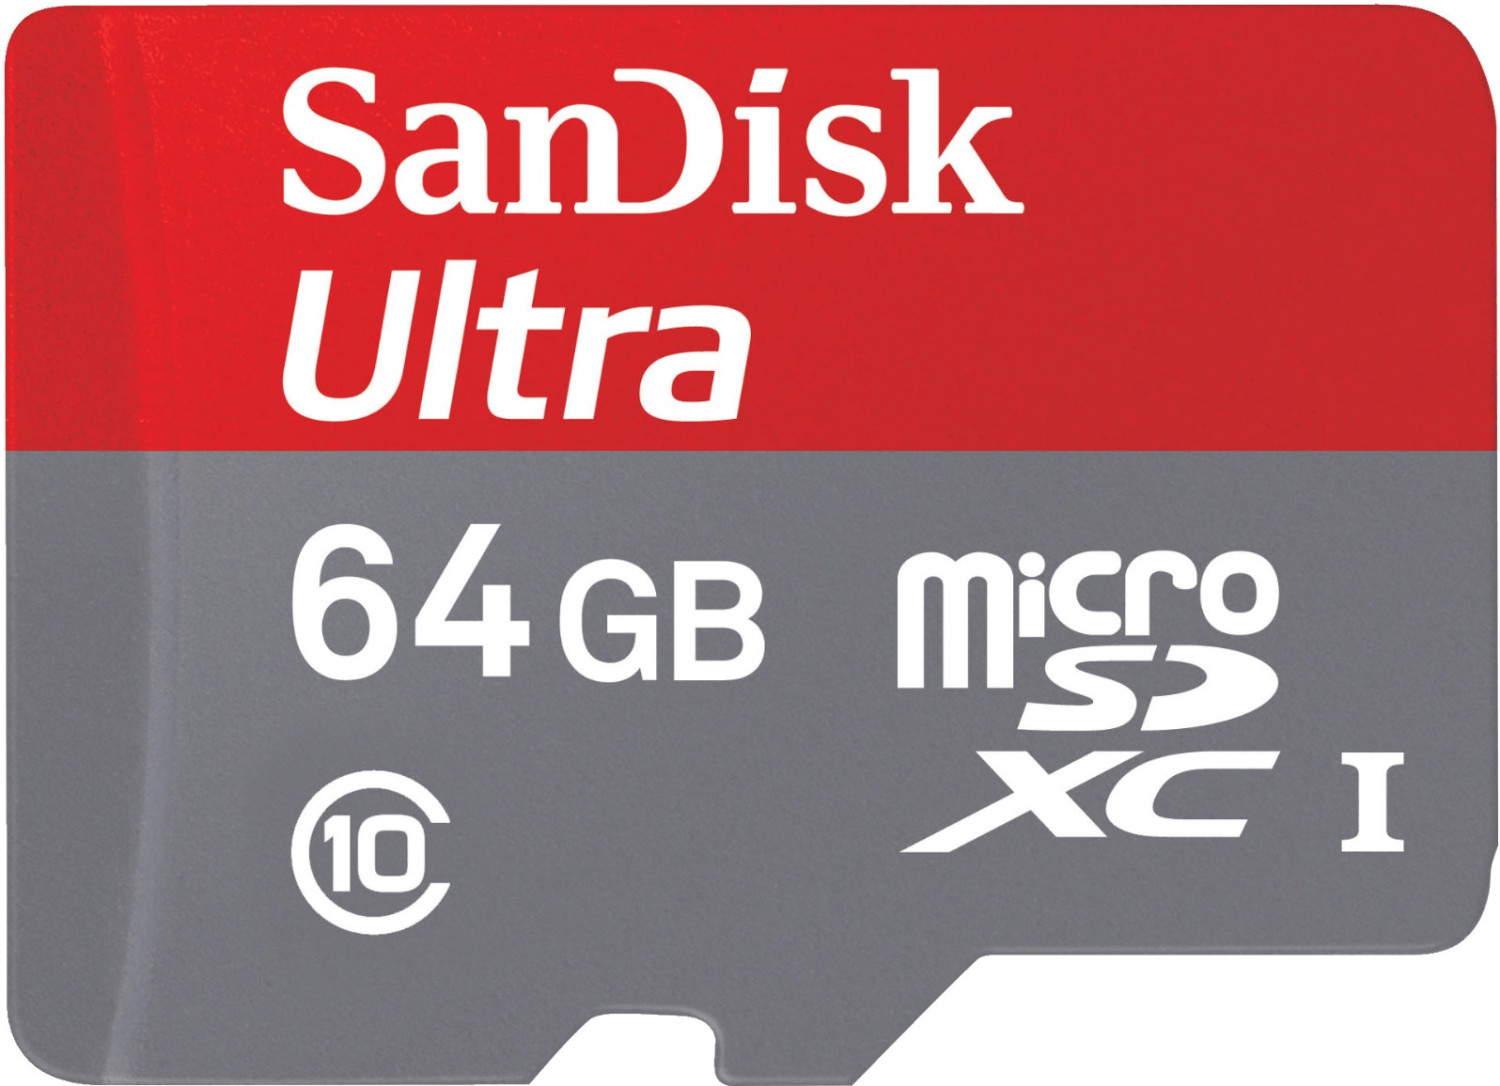 SanDisk Mobile Ultra microSDXC 64GB Class 10 UHS-I (SDSQUNC-064G-GN6IA)